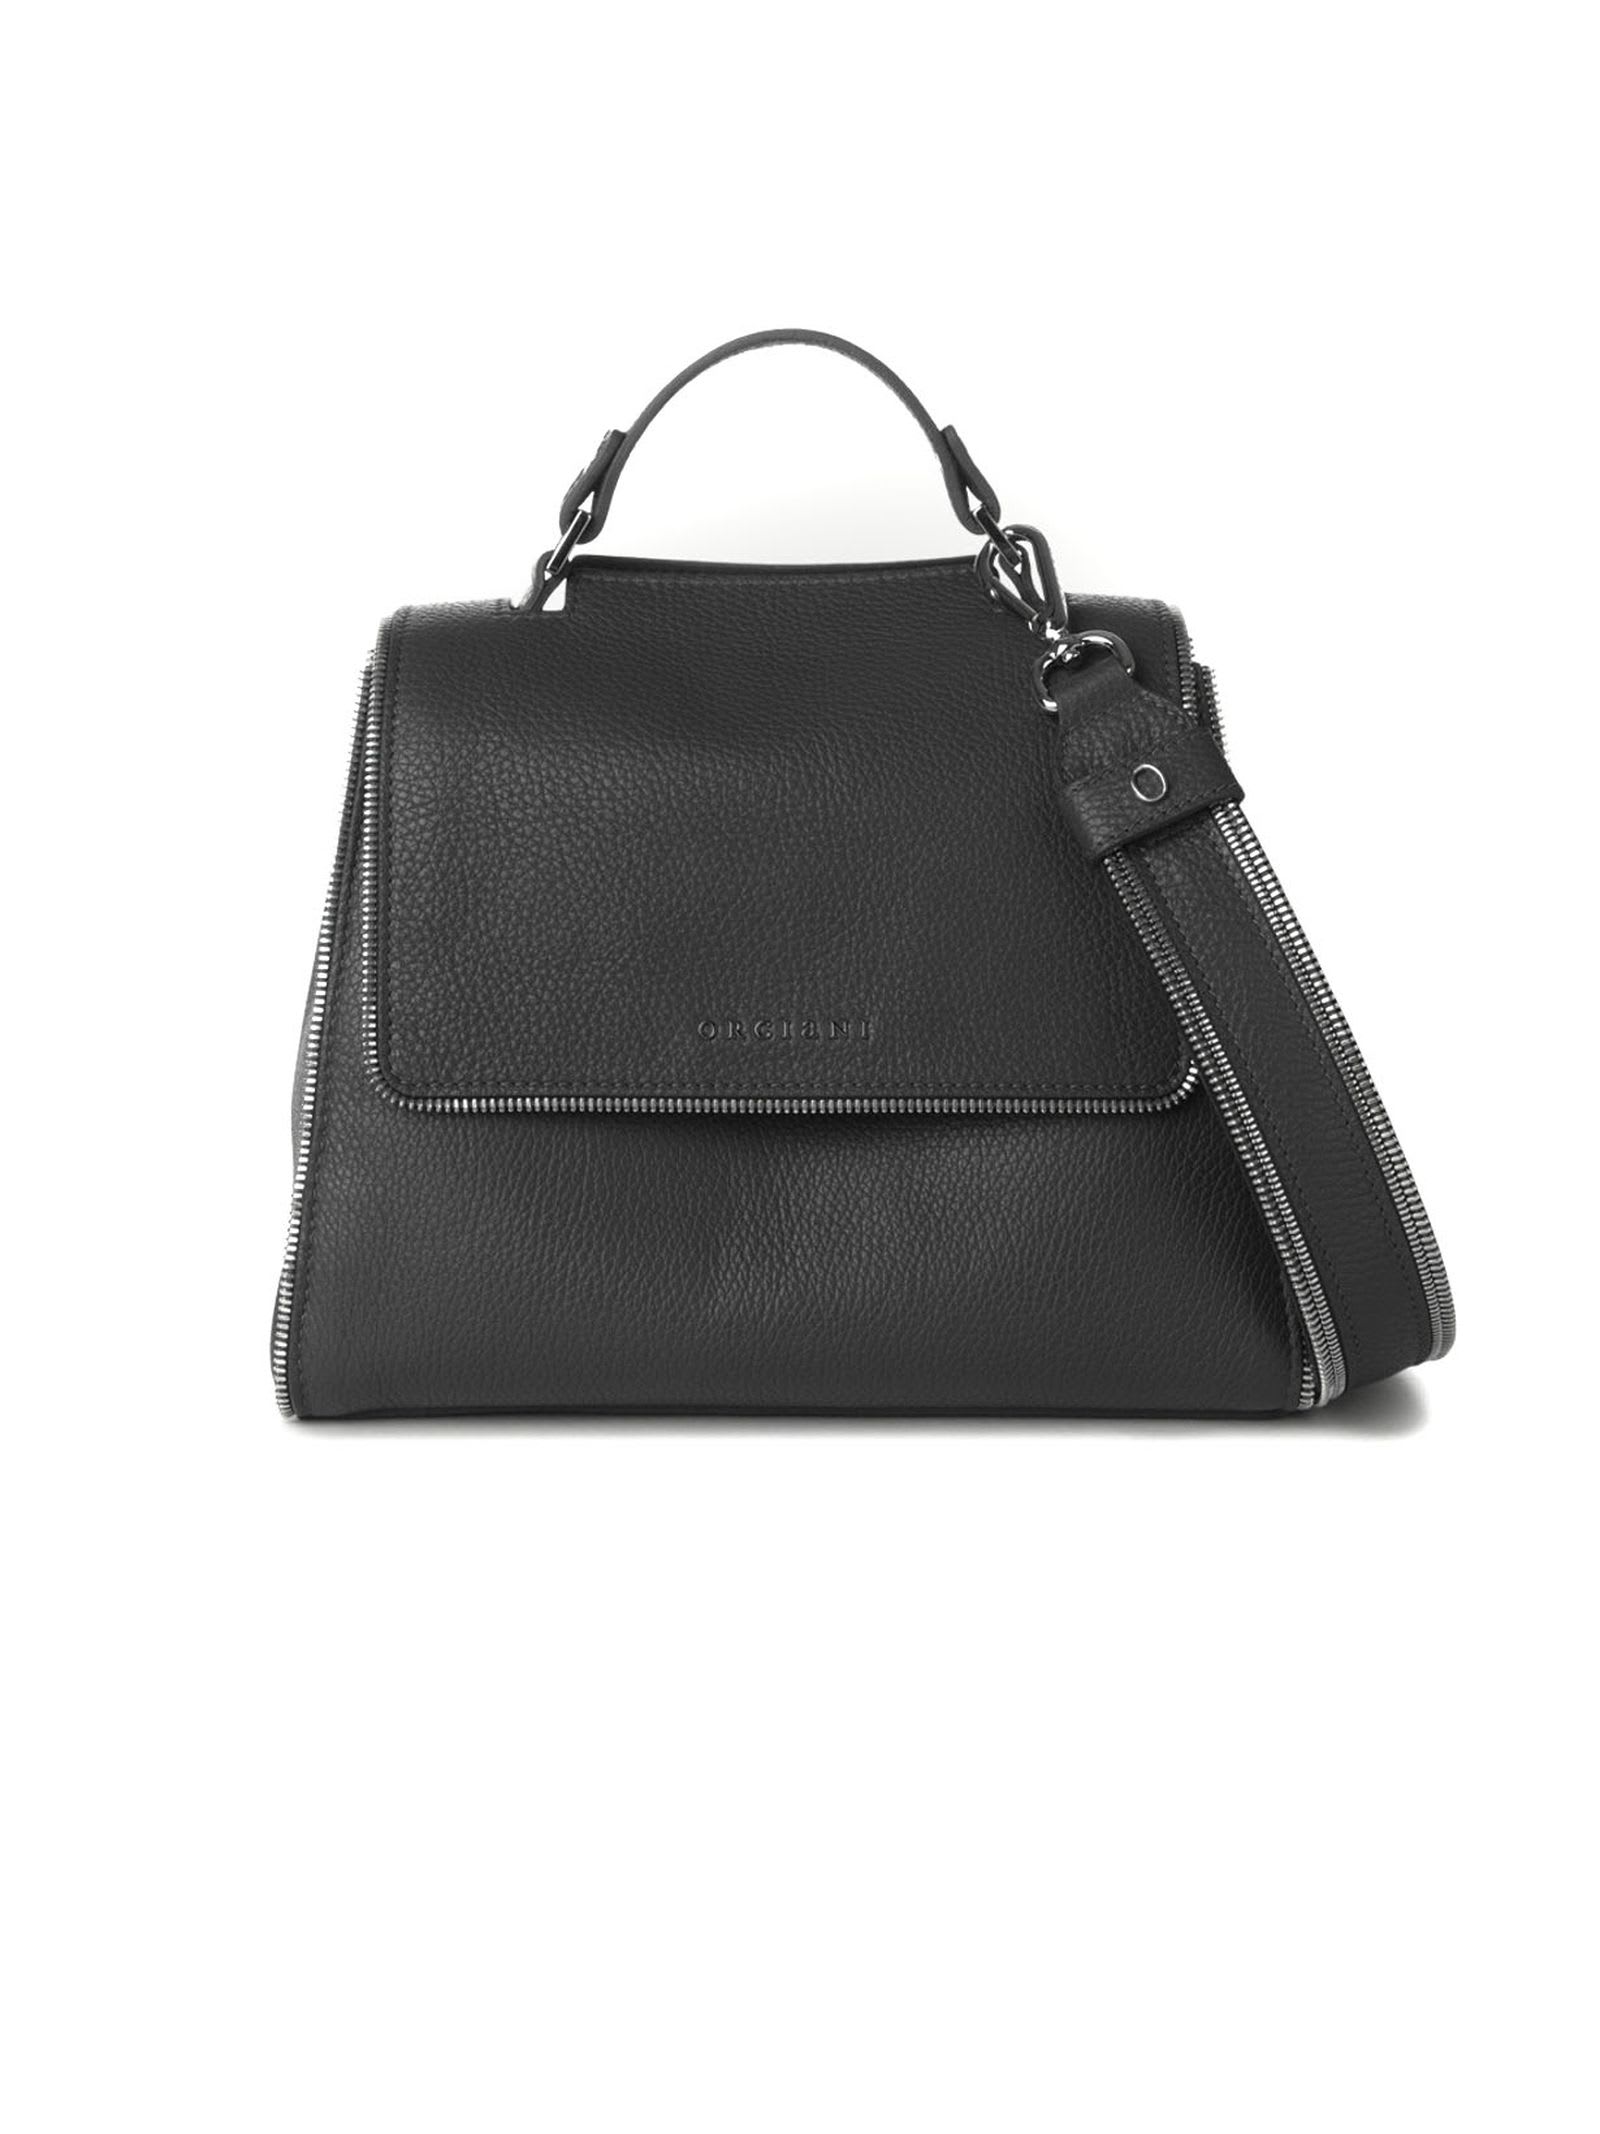 Orciani Black Grained Leather Handbag Bag